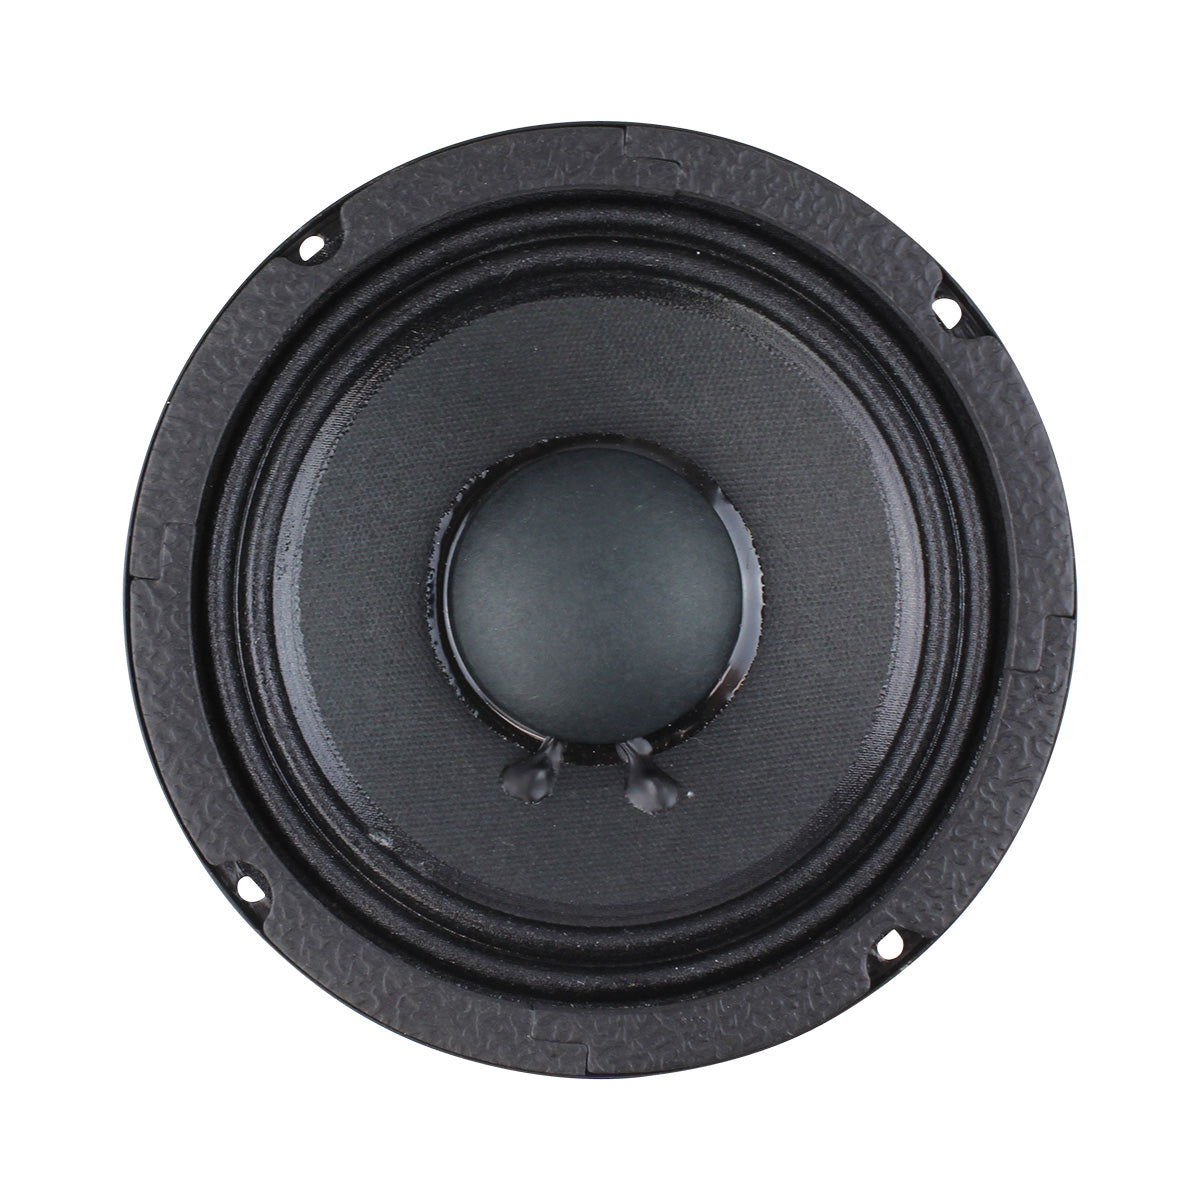 6.5 inch 400 Watts Midbass Loudspeaker - BLAST306